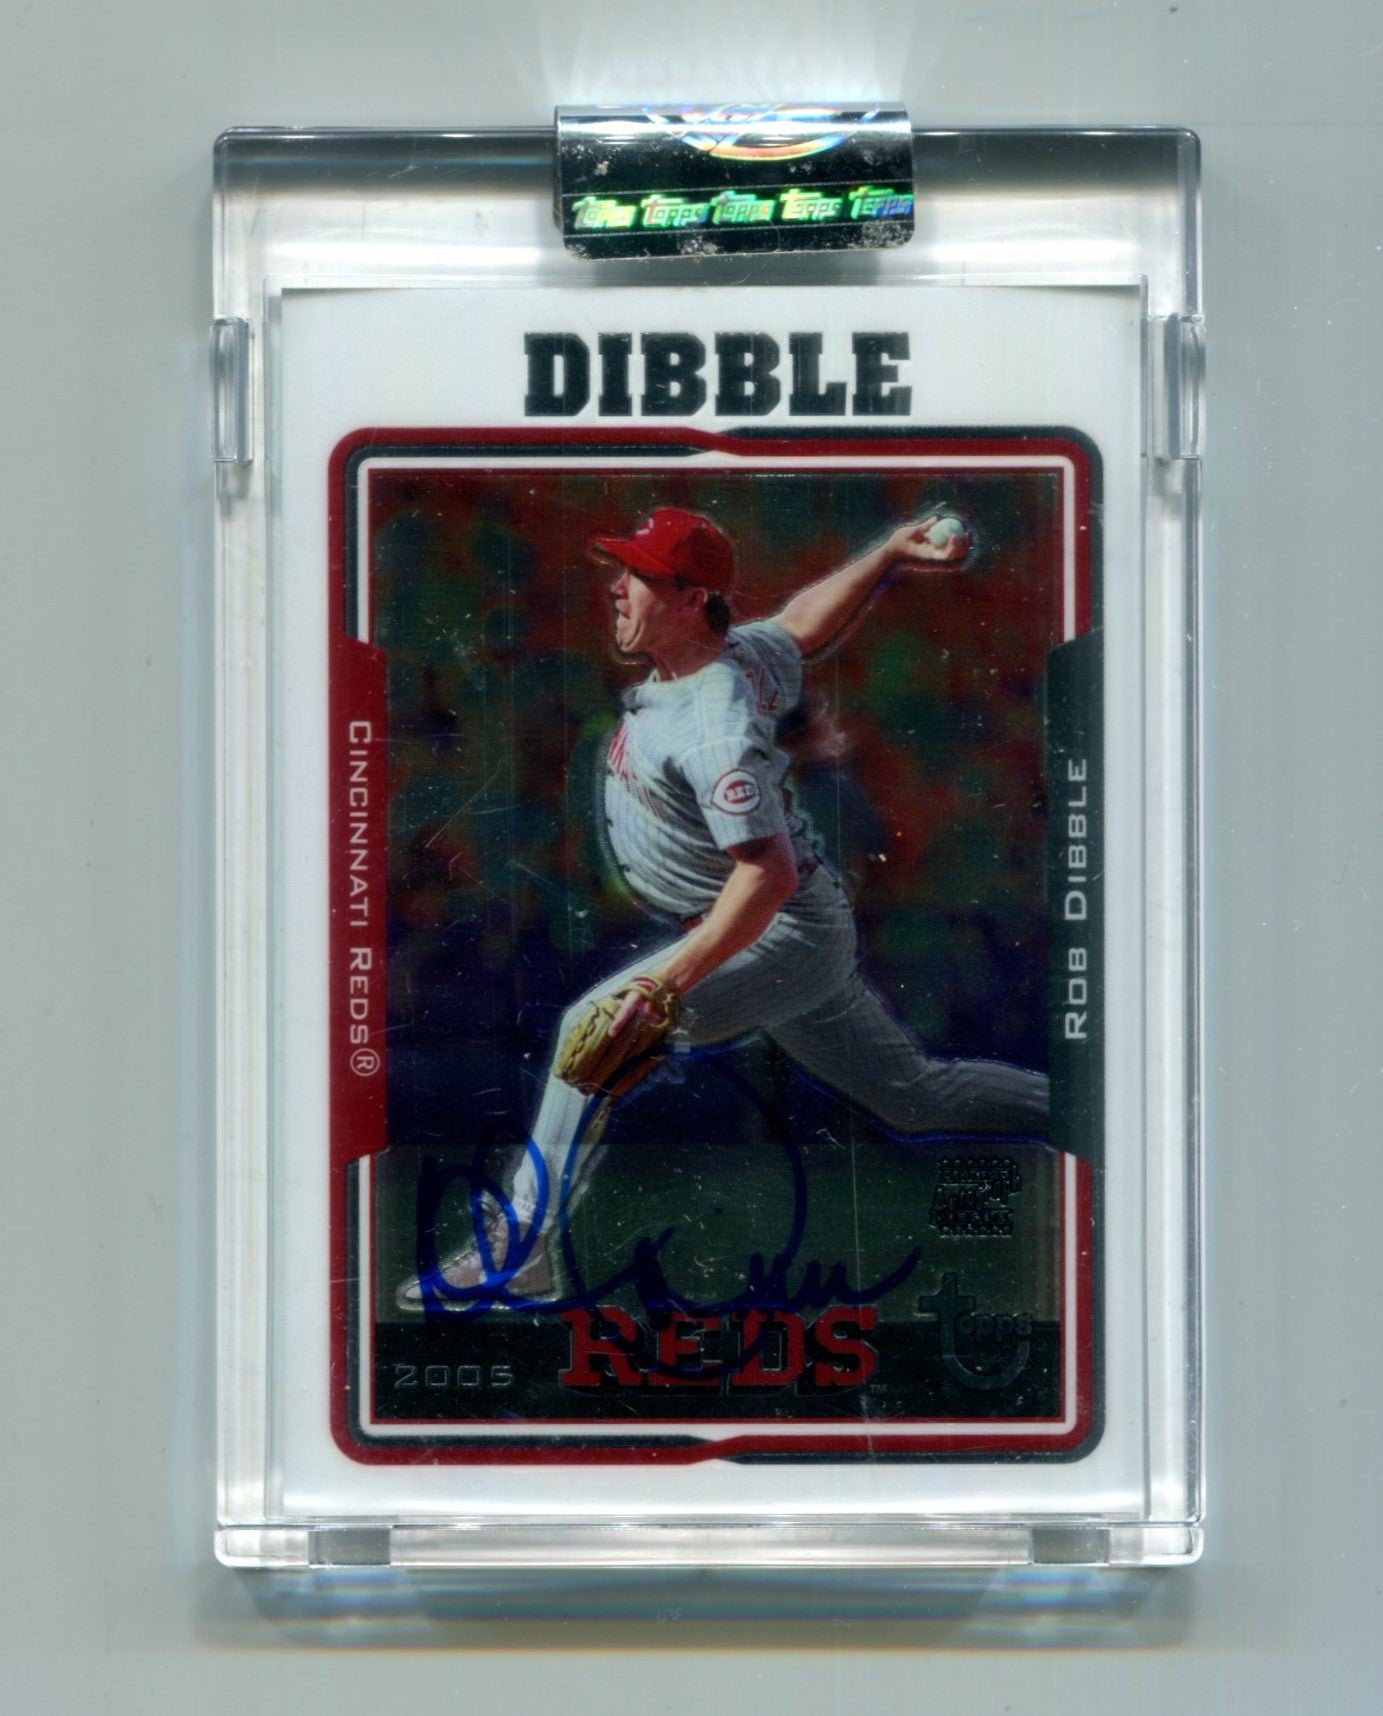 Rob Dibble Baseball Cards